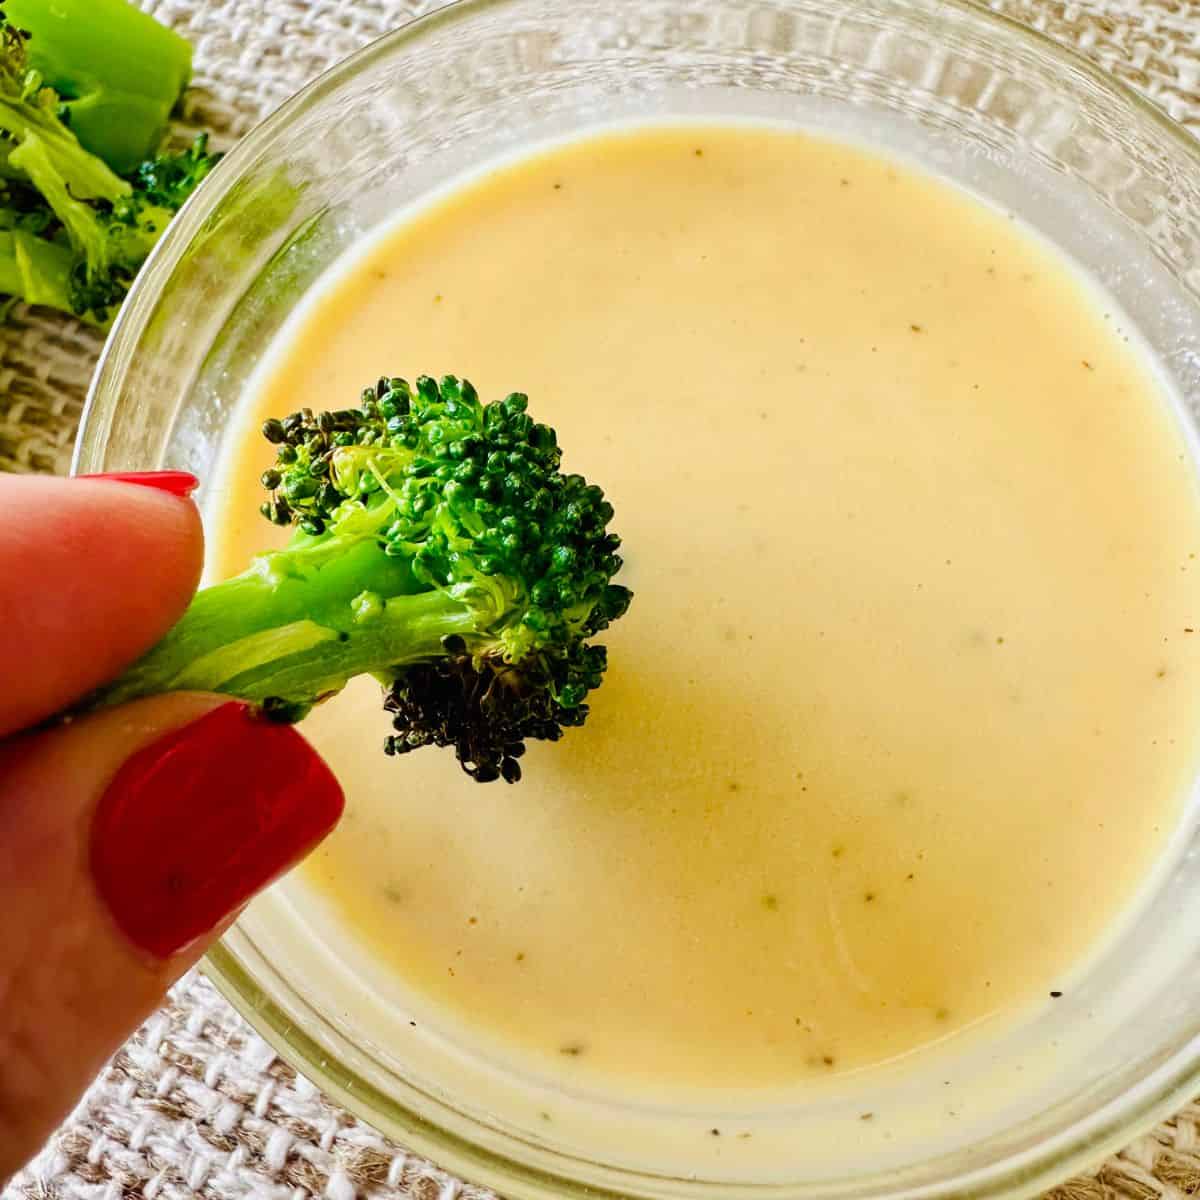 broccoli being dipped into vegan honey mustard